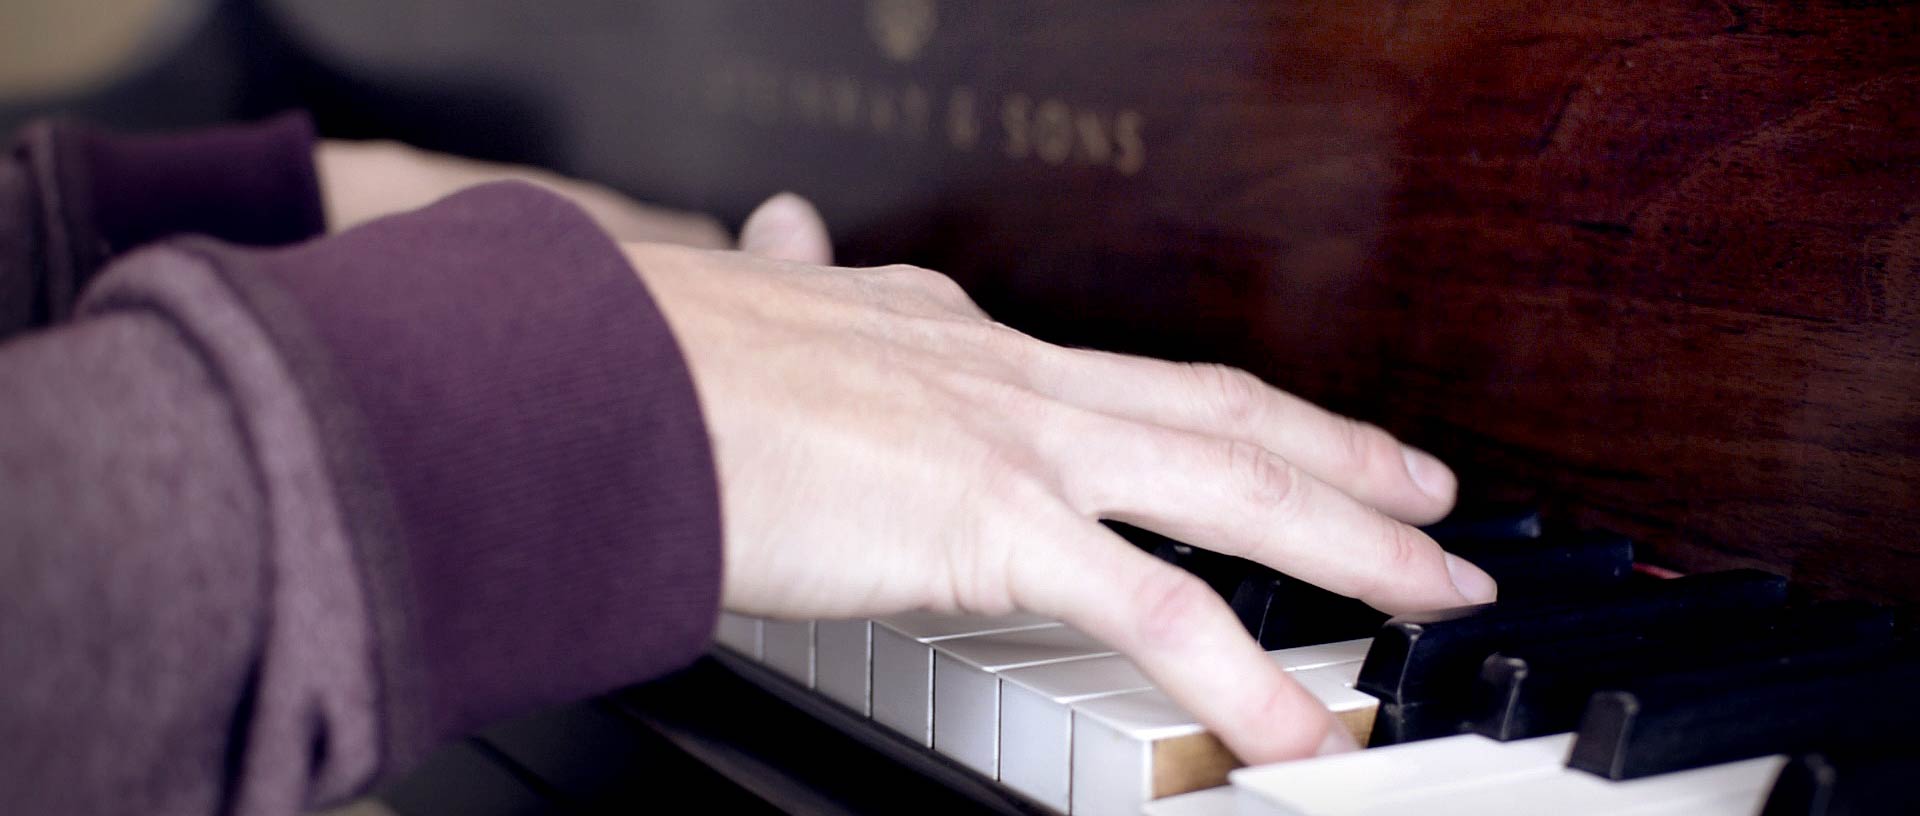 Hands on Piano | Holiday Christmas Piano Music